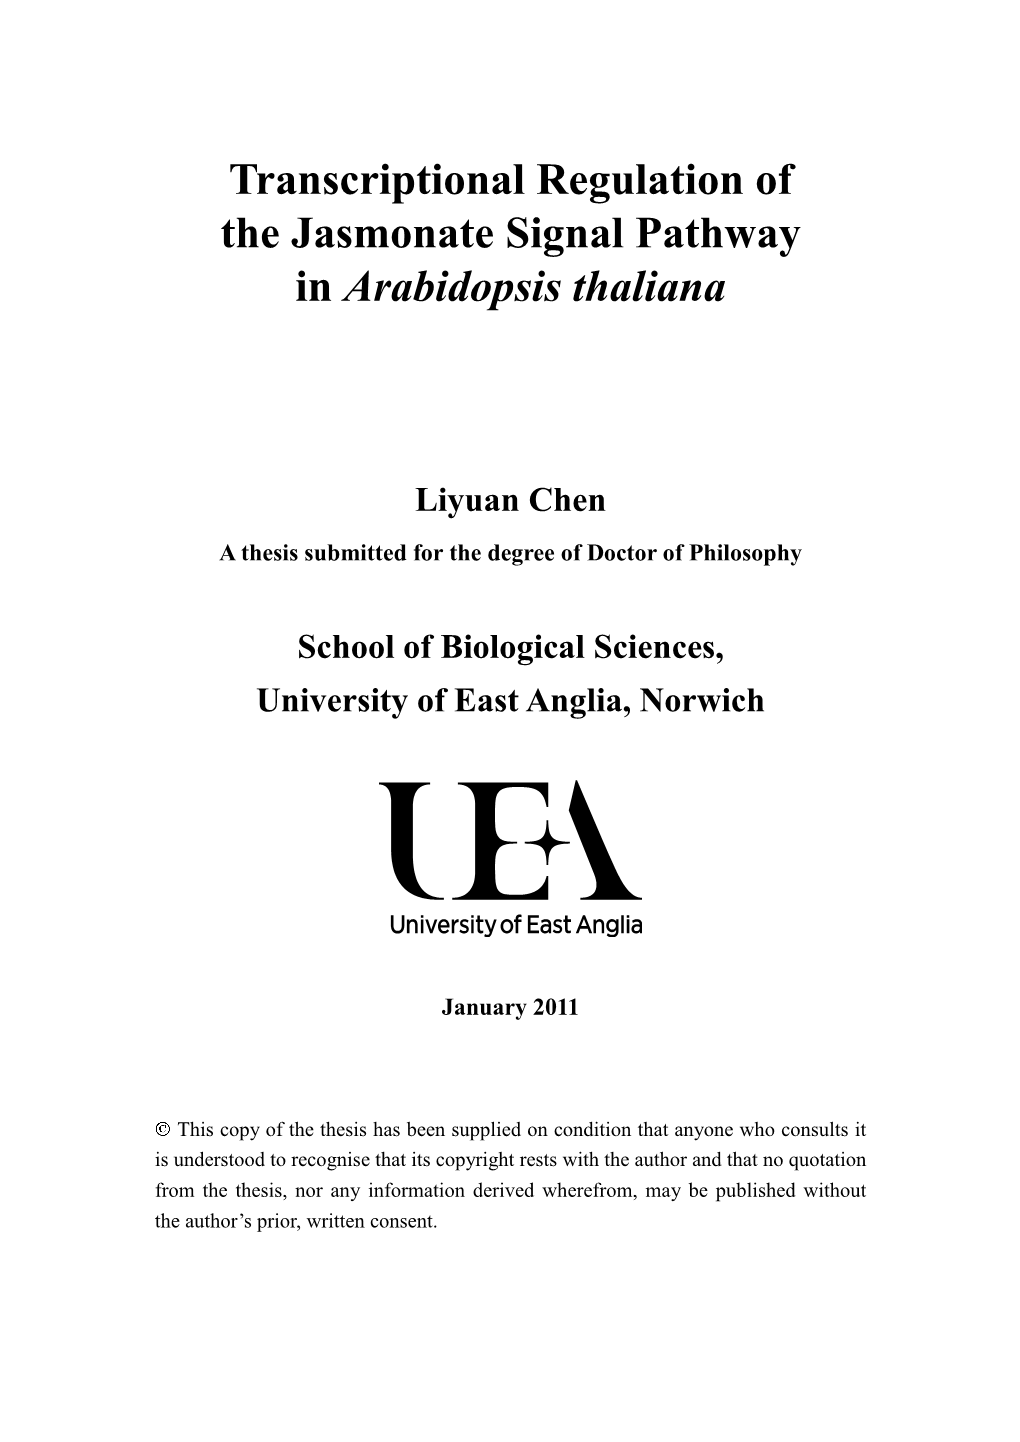 Transcriptional Regulation of the Jasmonate Signal Pathway in Arabidopsis Thaliana